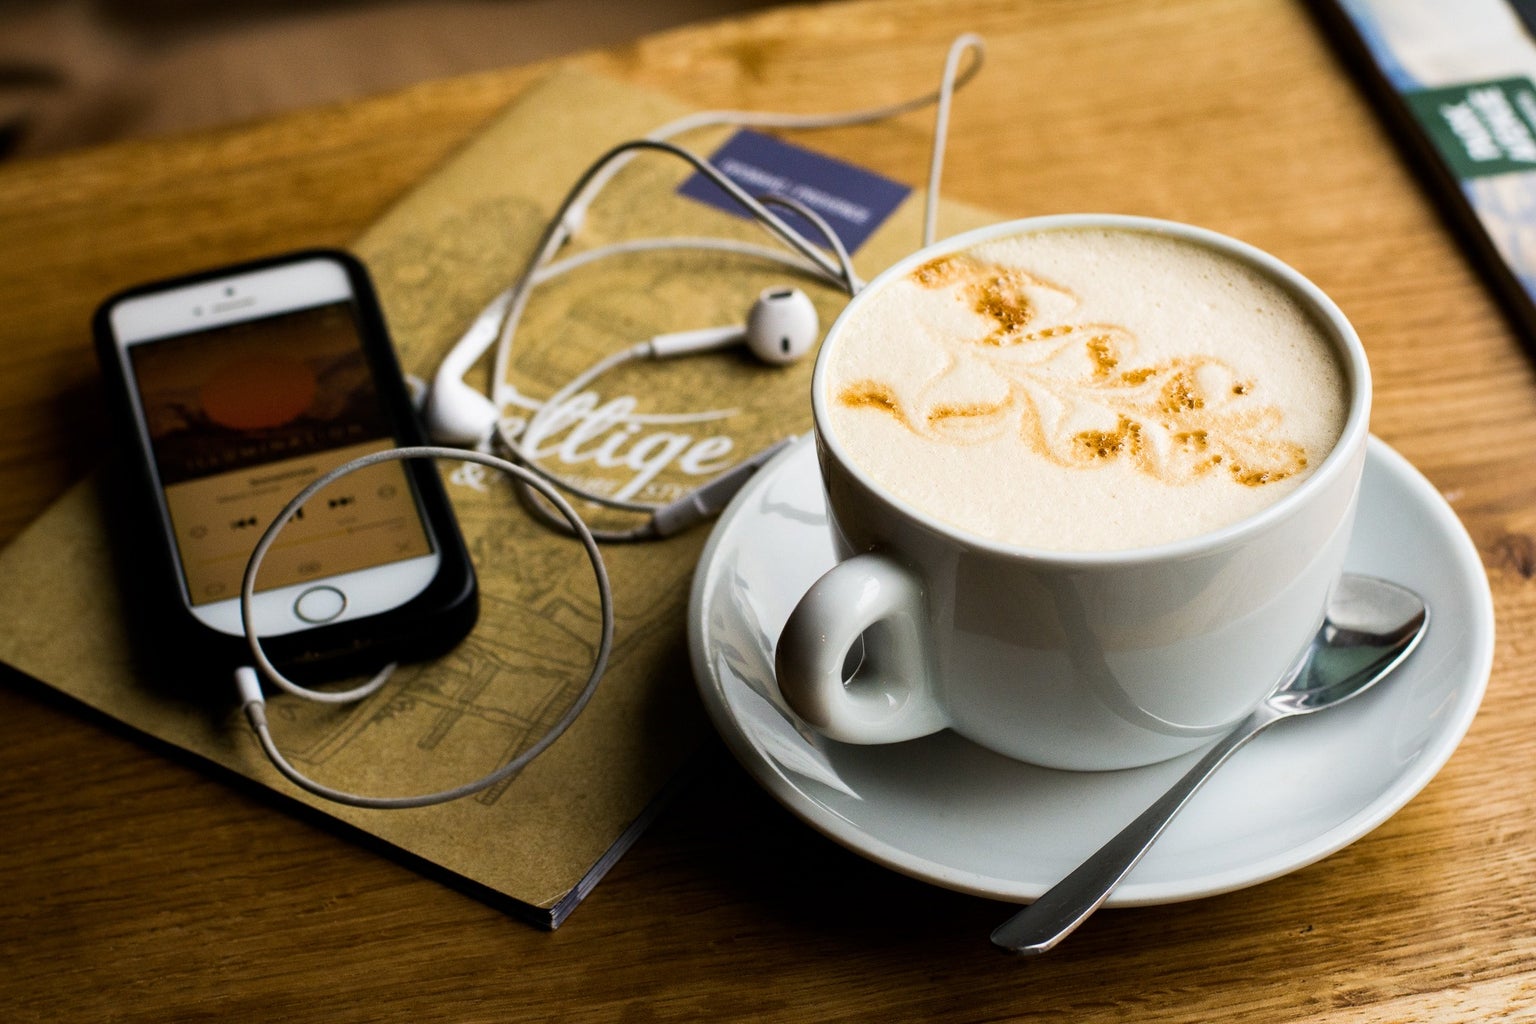 phone, headphones, and coffee with foam art